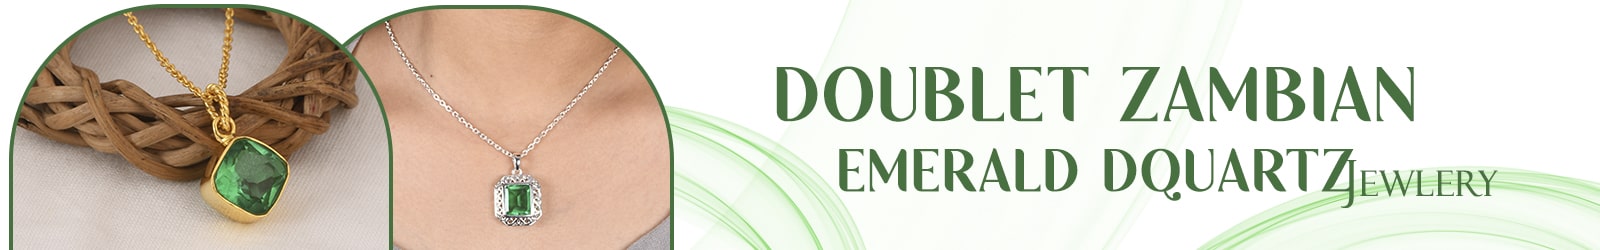 Silver Doublet Zambian Emerald Quartz Jewelry Wholesale Supplier